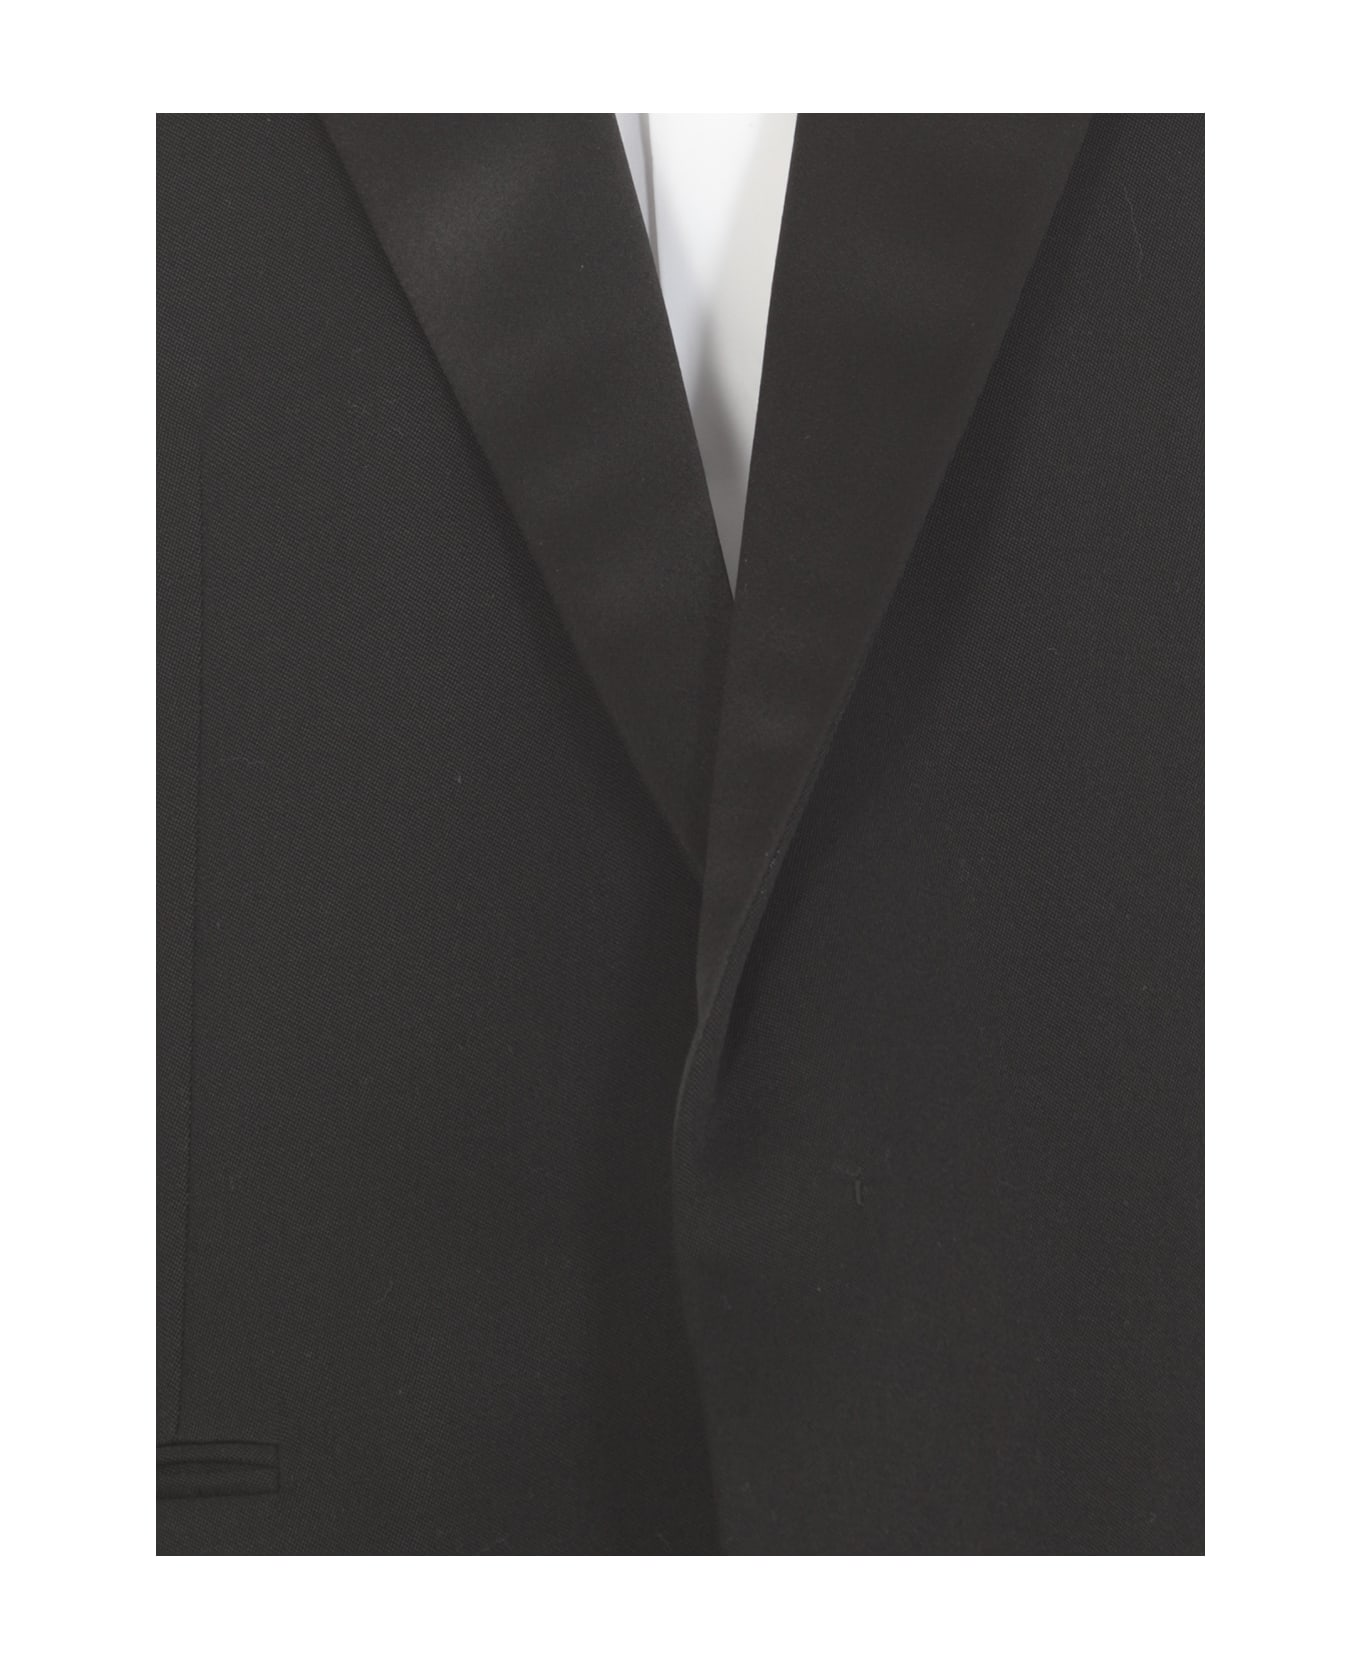 Jil Sander Wool And Silk Tailored Suit - Black